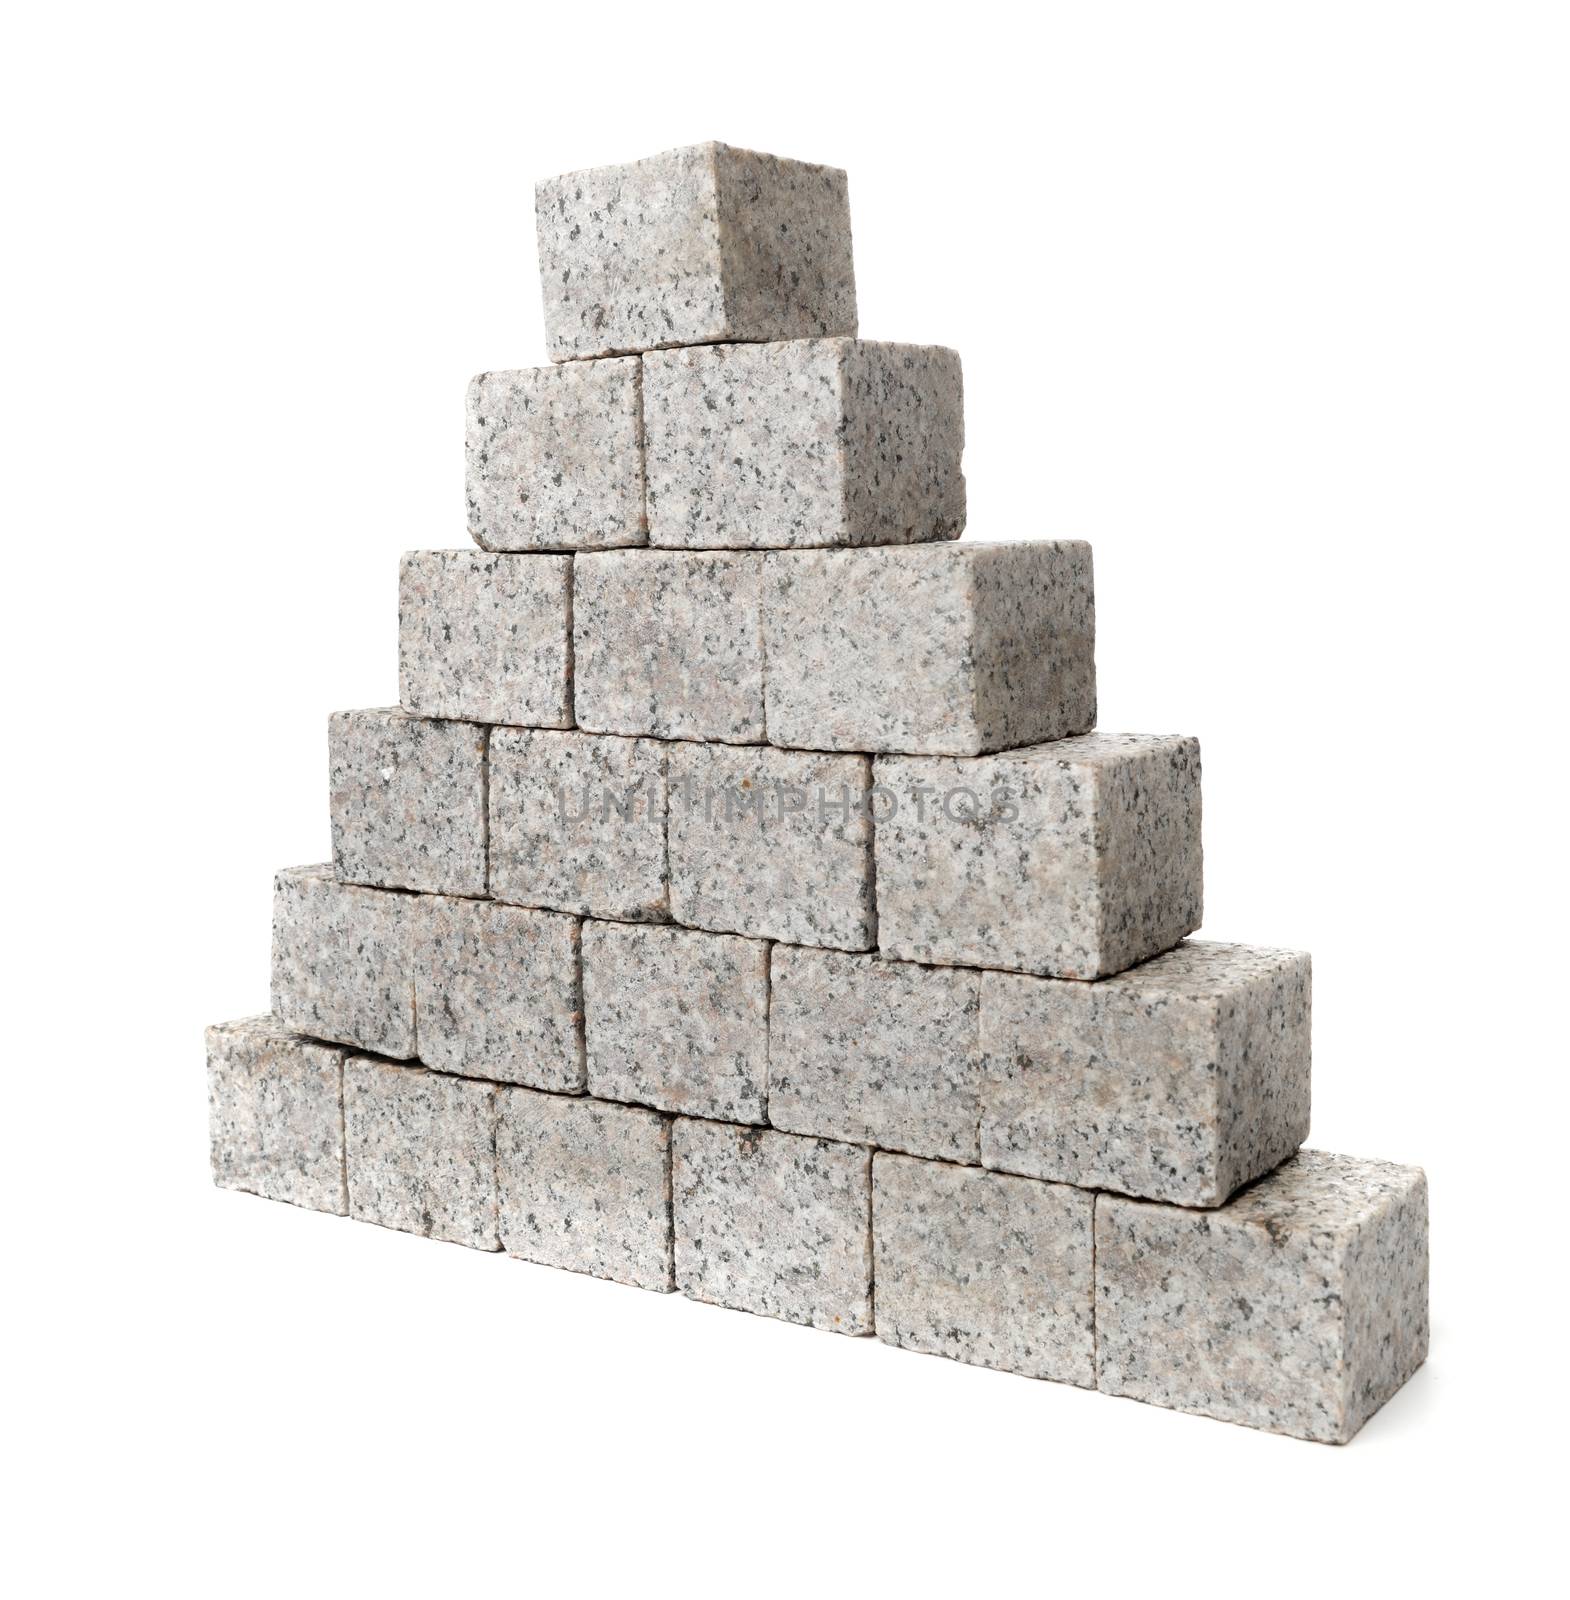 Granite Pyramid by Stocksnapper